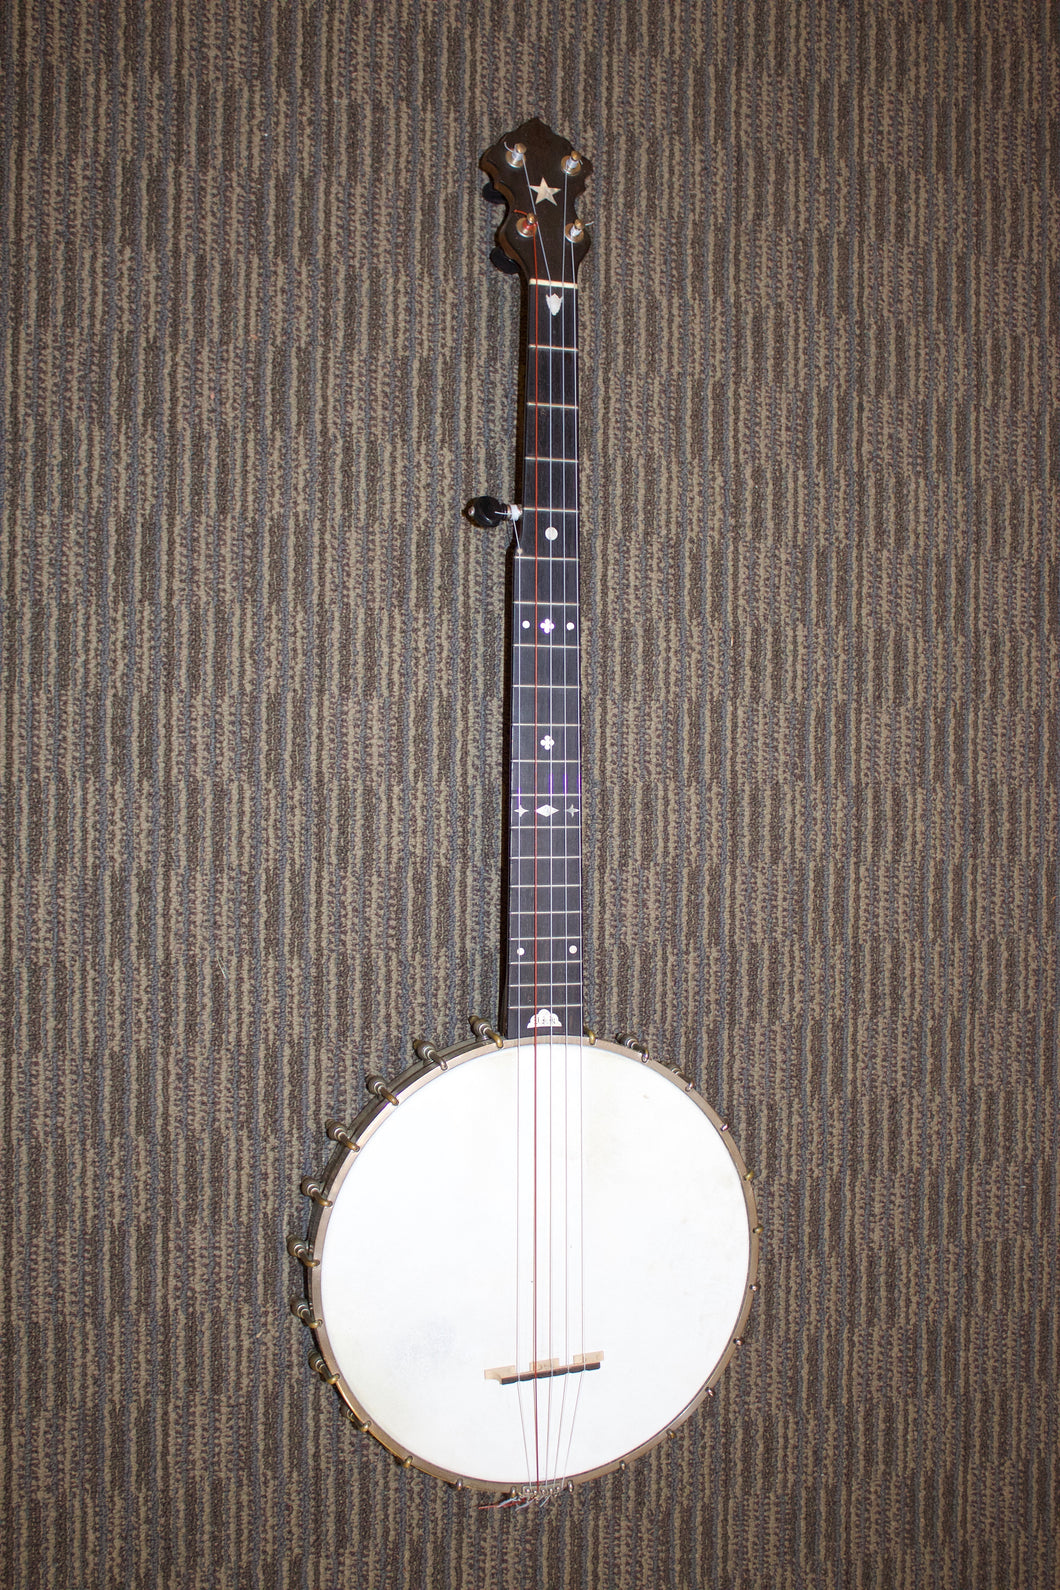 Lyon & Healy - Washburn Vintage Open-back Banjo c. 1890s